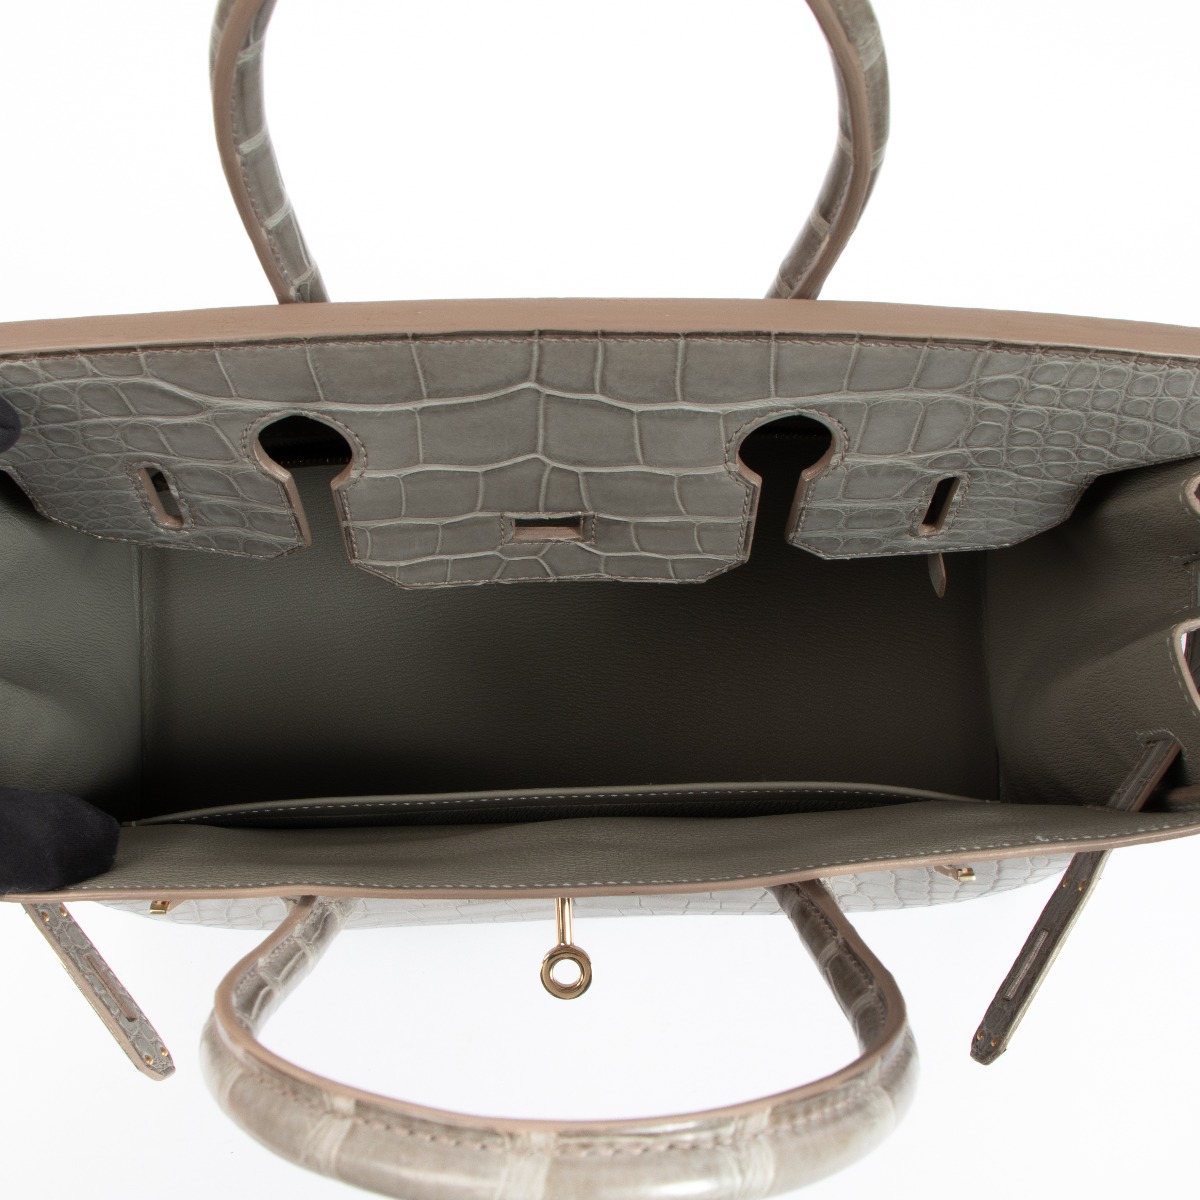 Hermès Birkin Ghillies 30 Bag Beton Limited Edition - Alligator